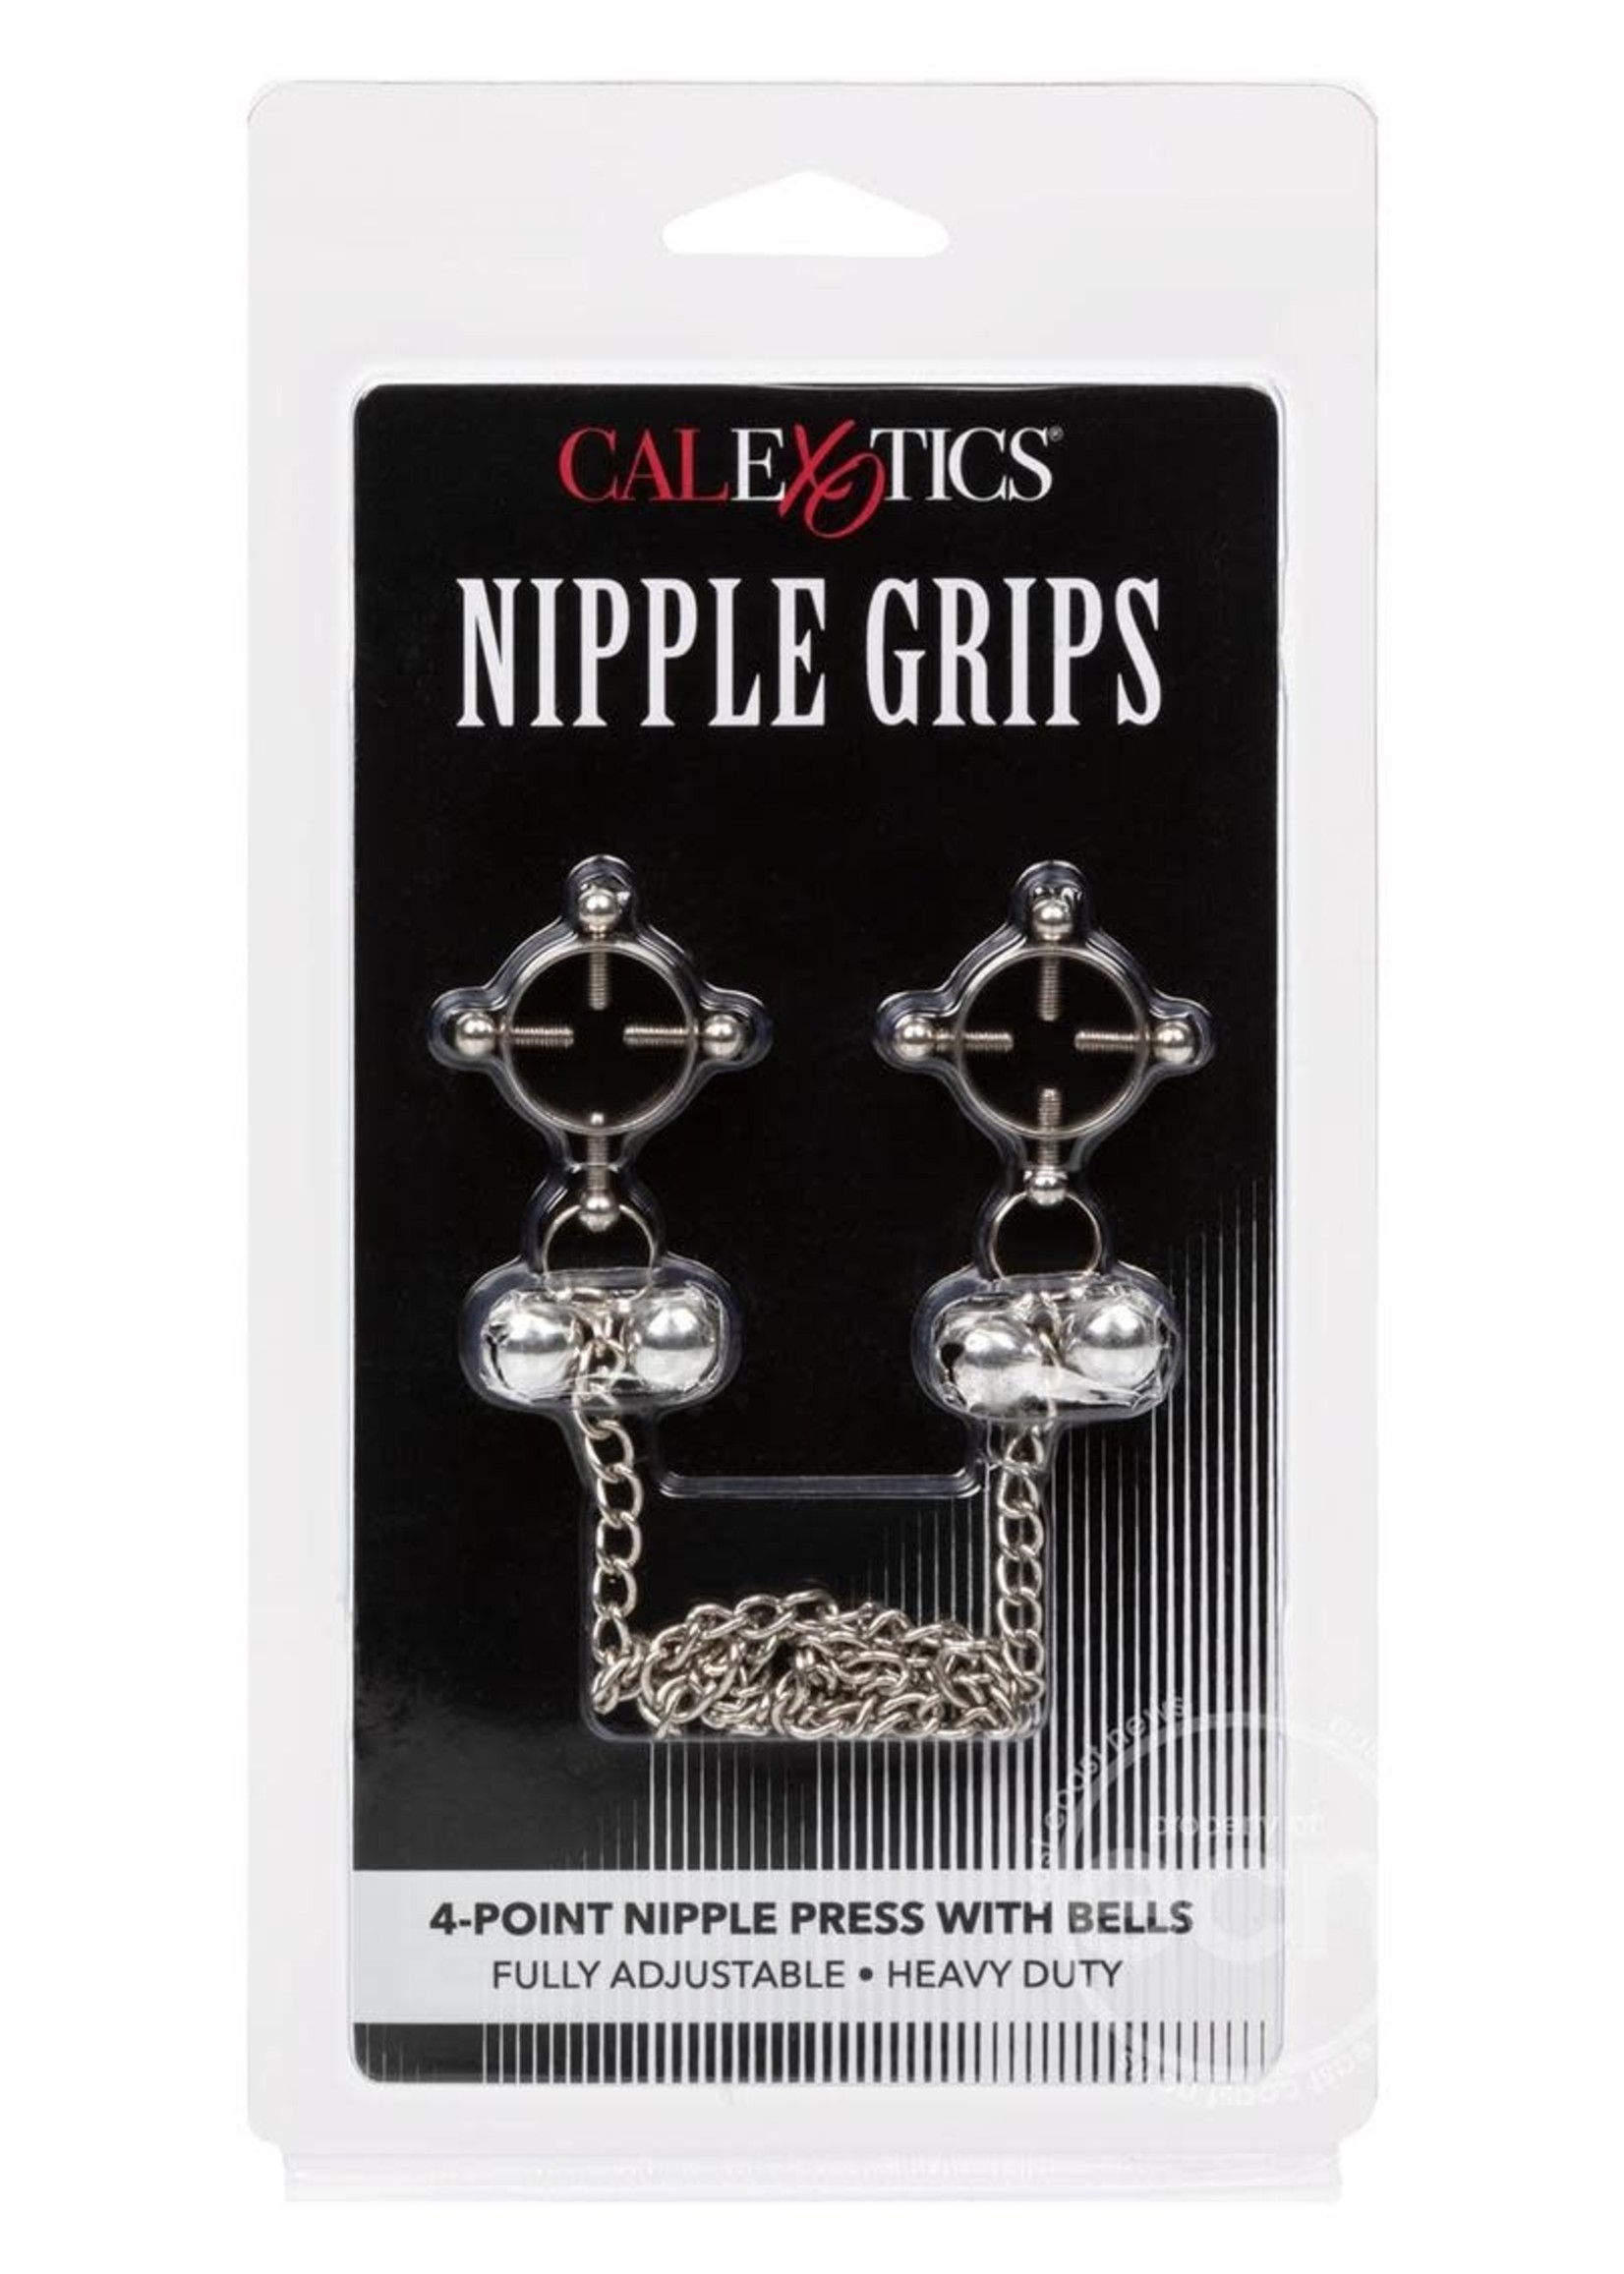 Calexotics Nipple Grips 4-Point Nipple Press with Bells